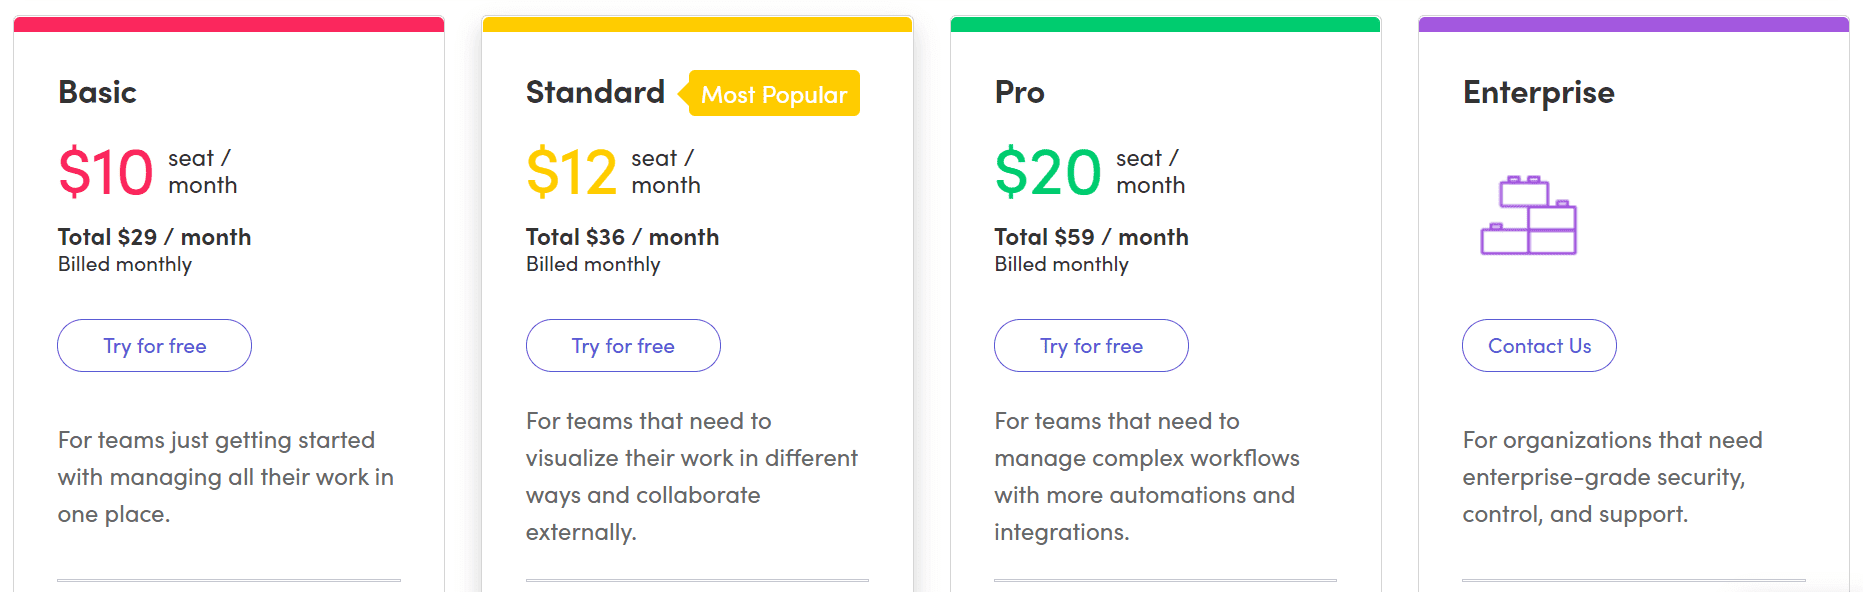 monday.com pricing plan